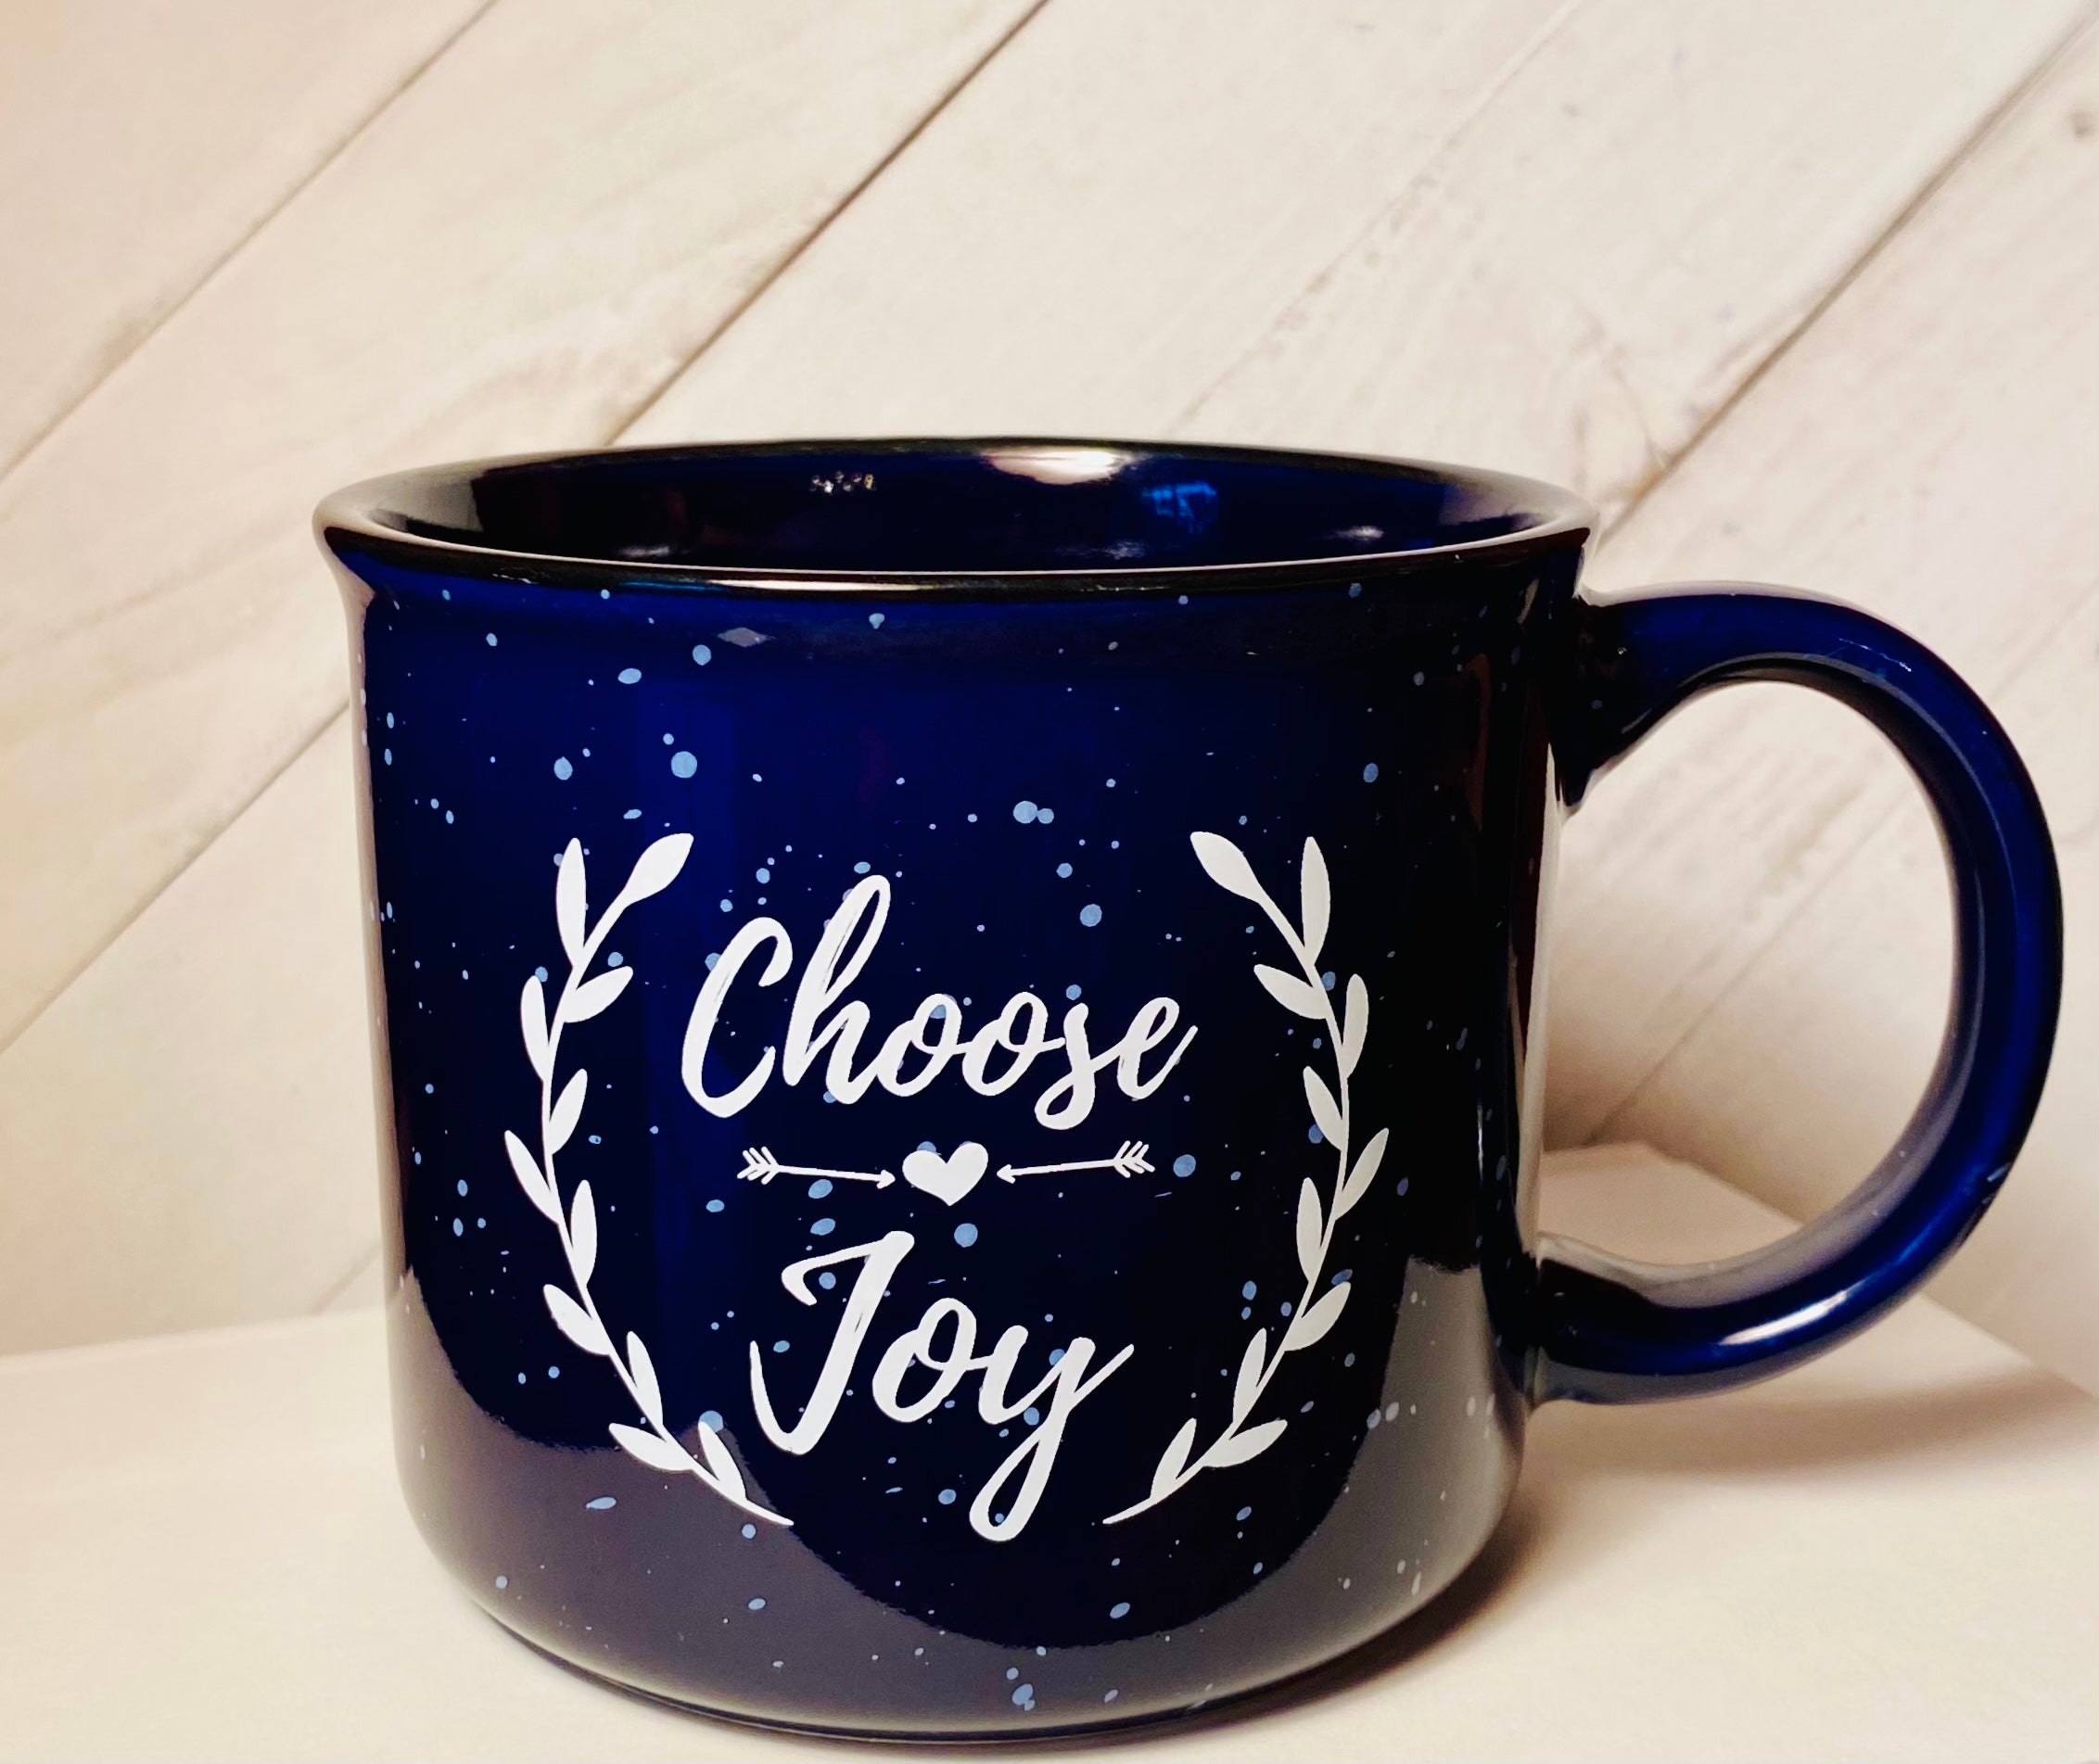 Joy - Green Campfire Coffee Mug - 18 oz